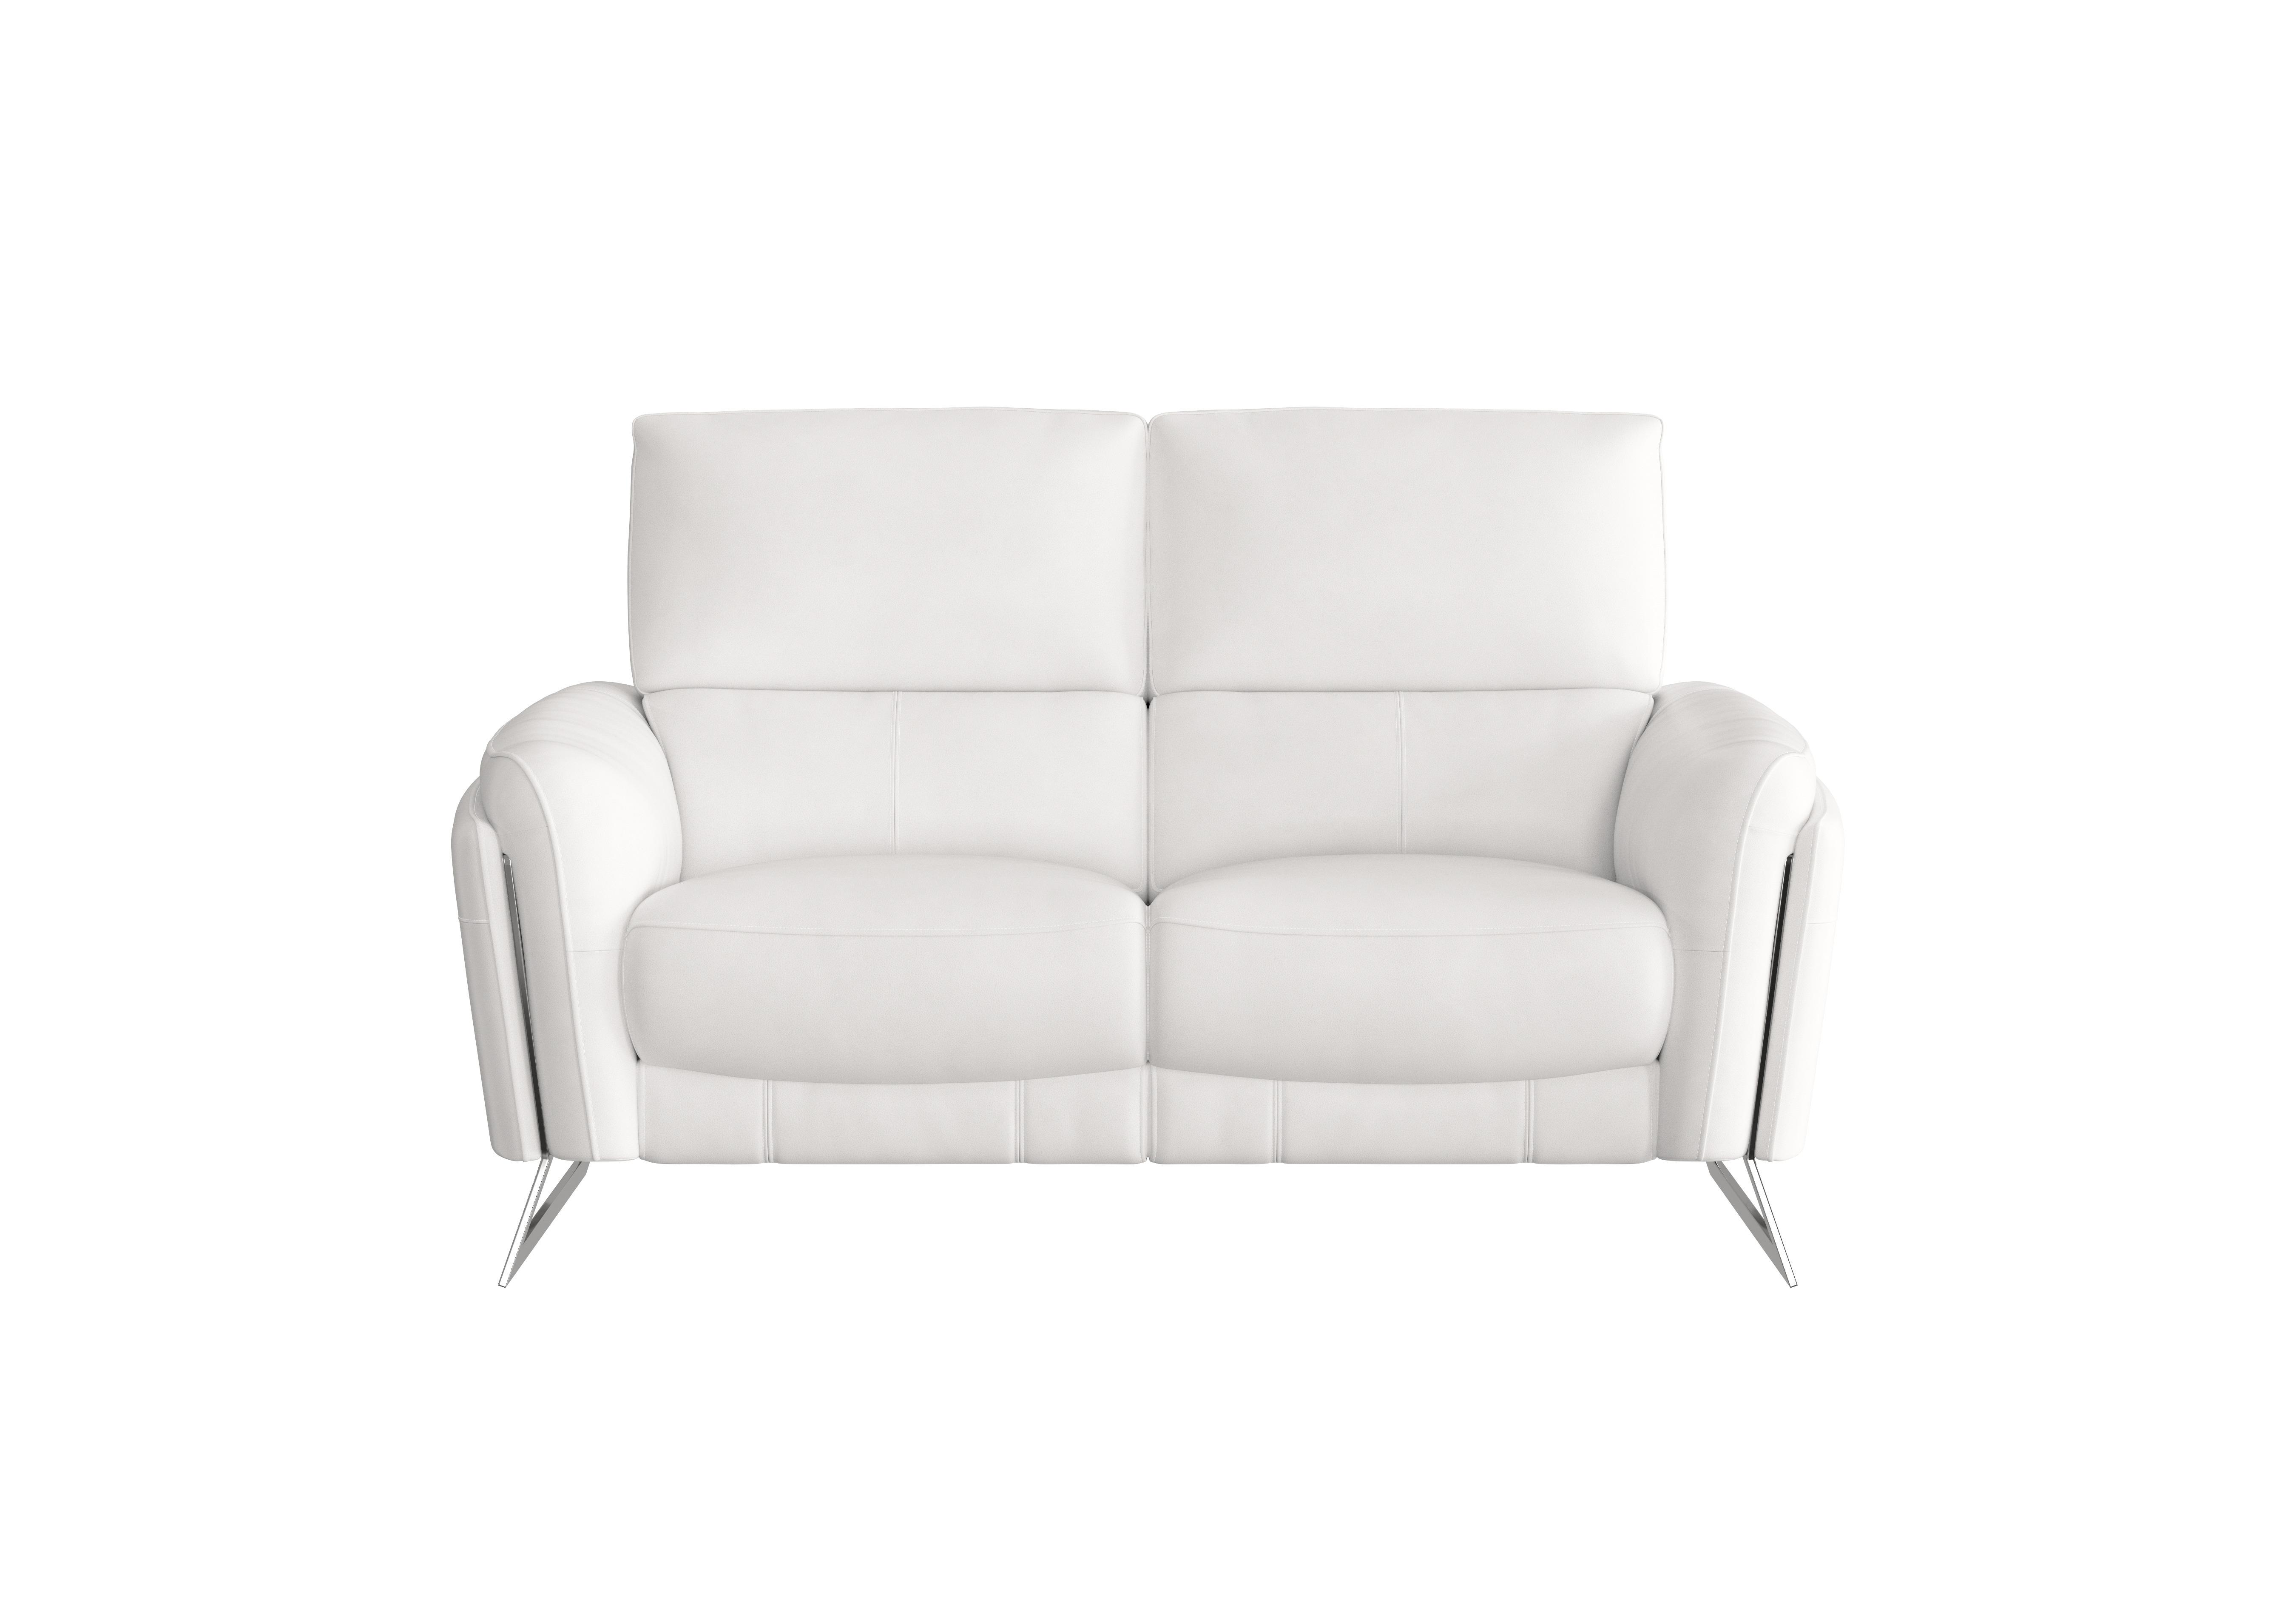 Amarilla 2 Seater Leather Sofa in Bv-744d Star White on Furniture Village